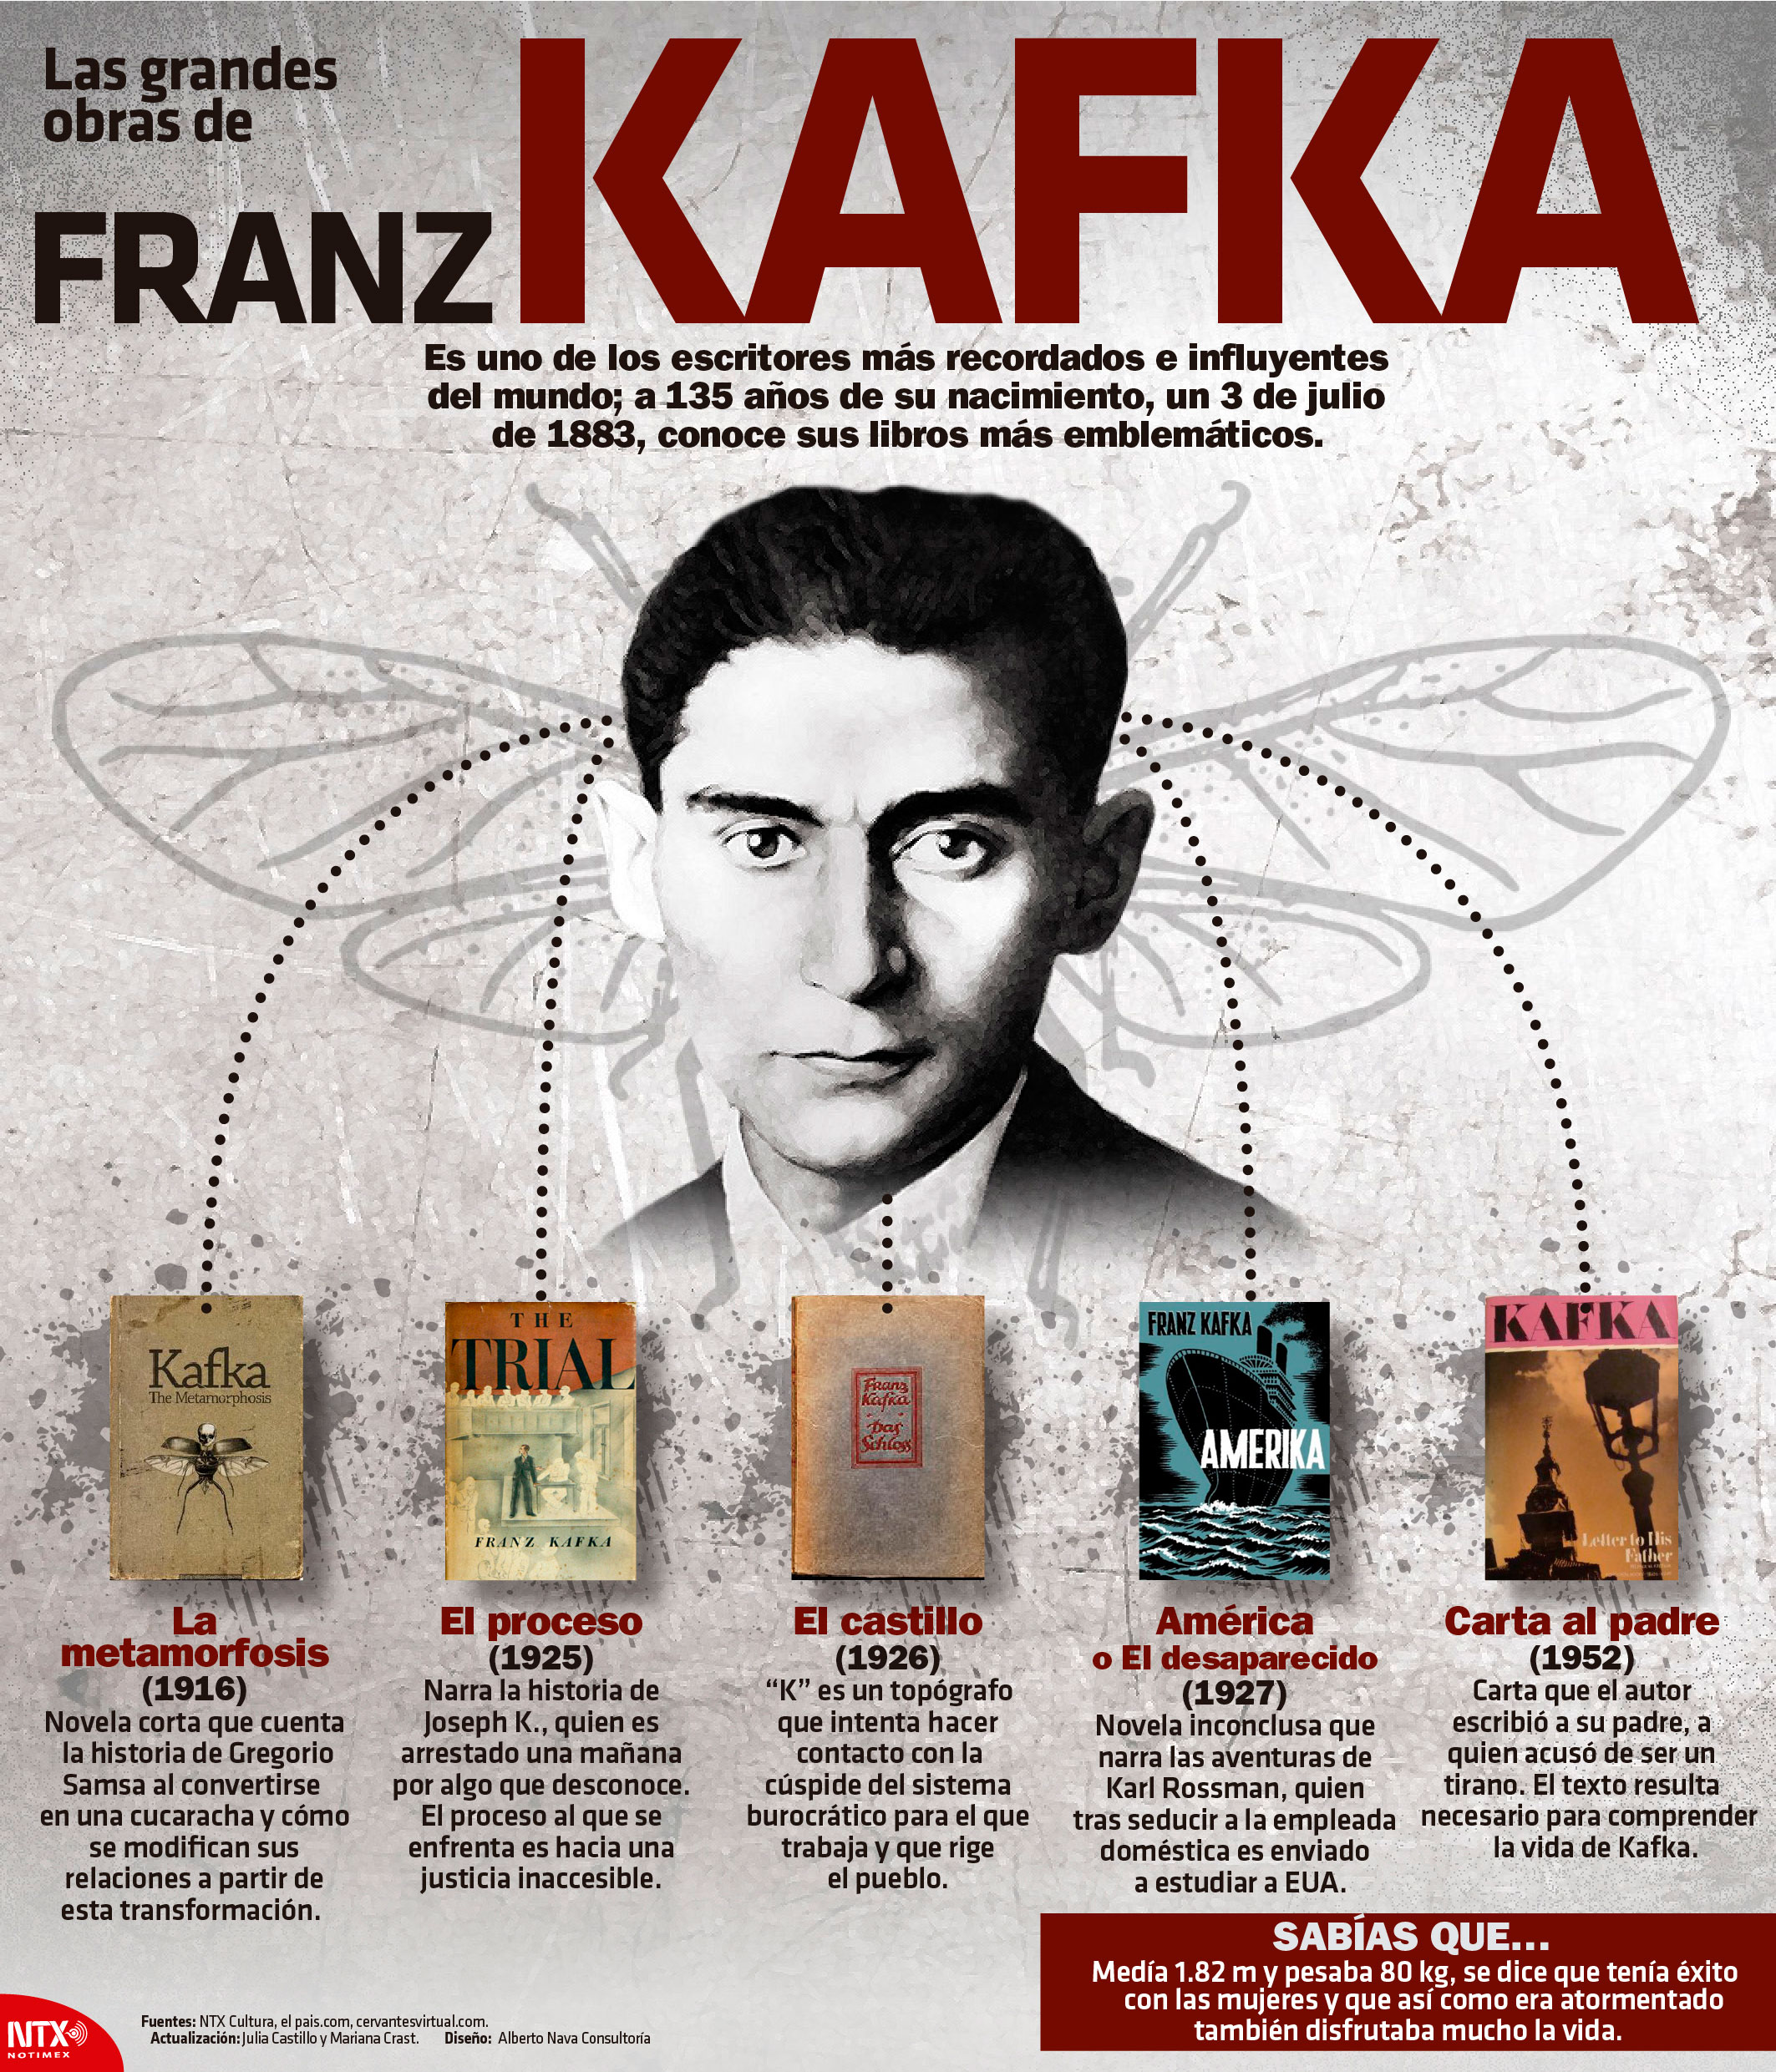 Las grandes obras de Franz Kafka